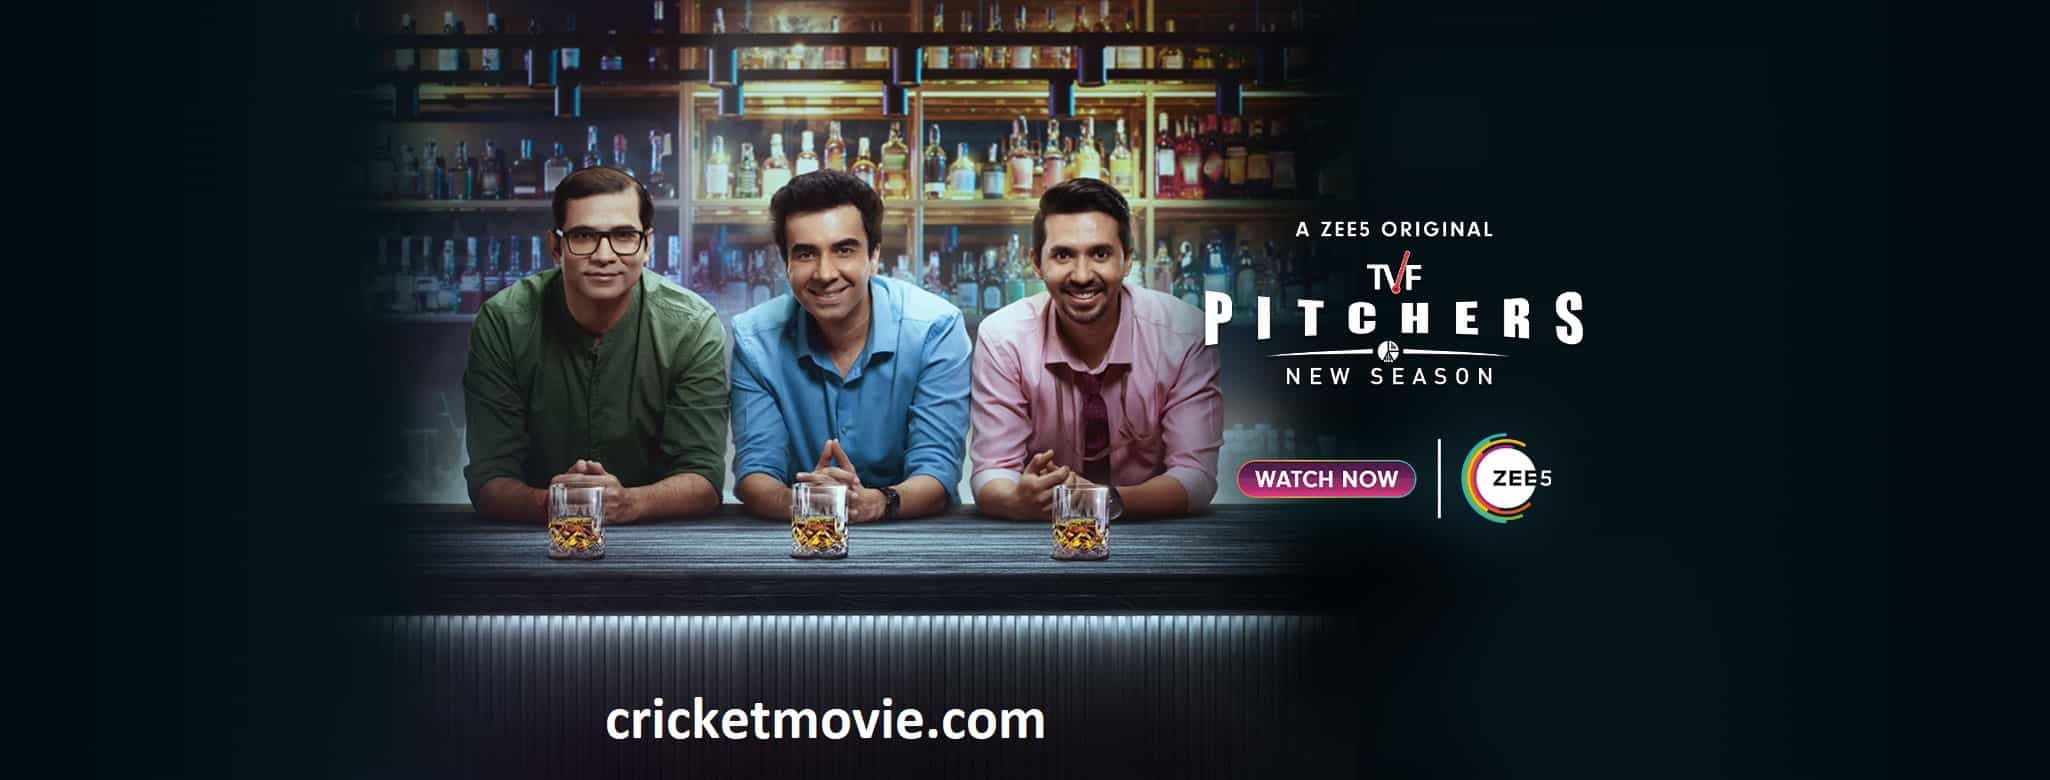 Pitchers Season 2 Review-cricketmovie.com